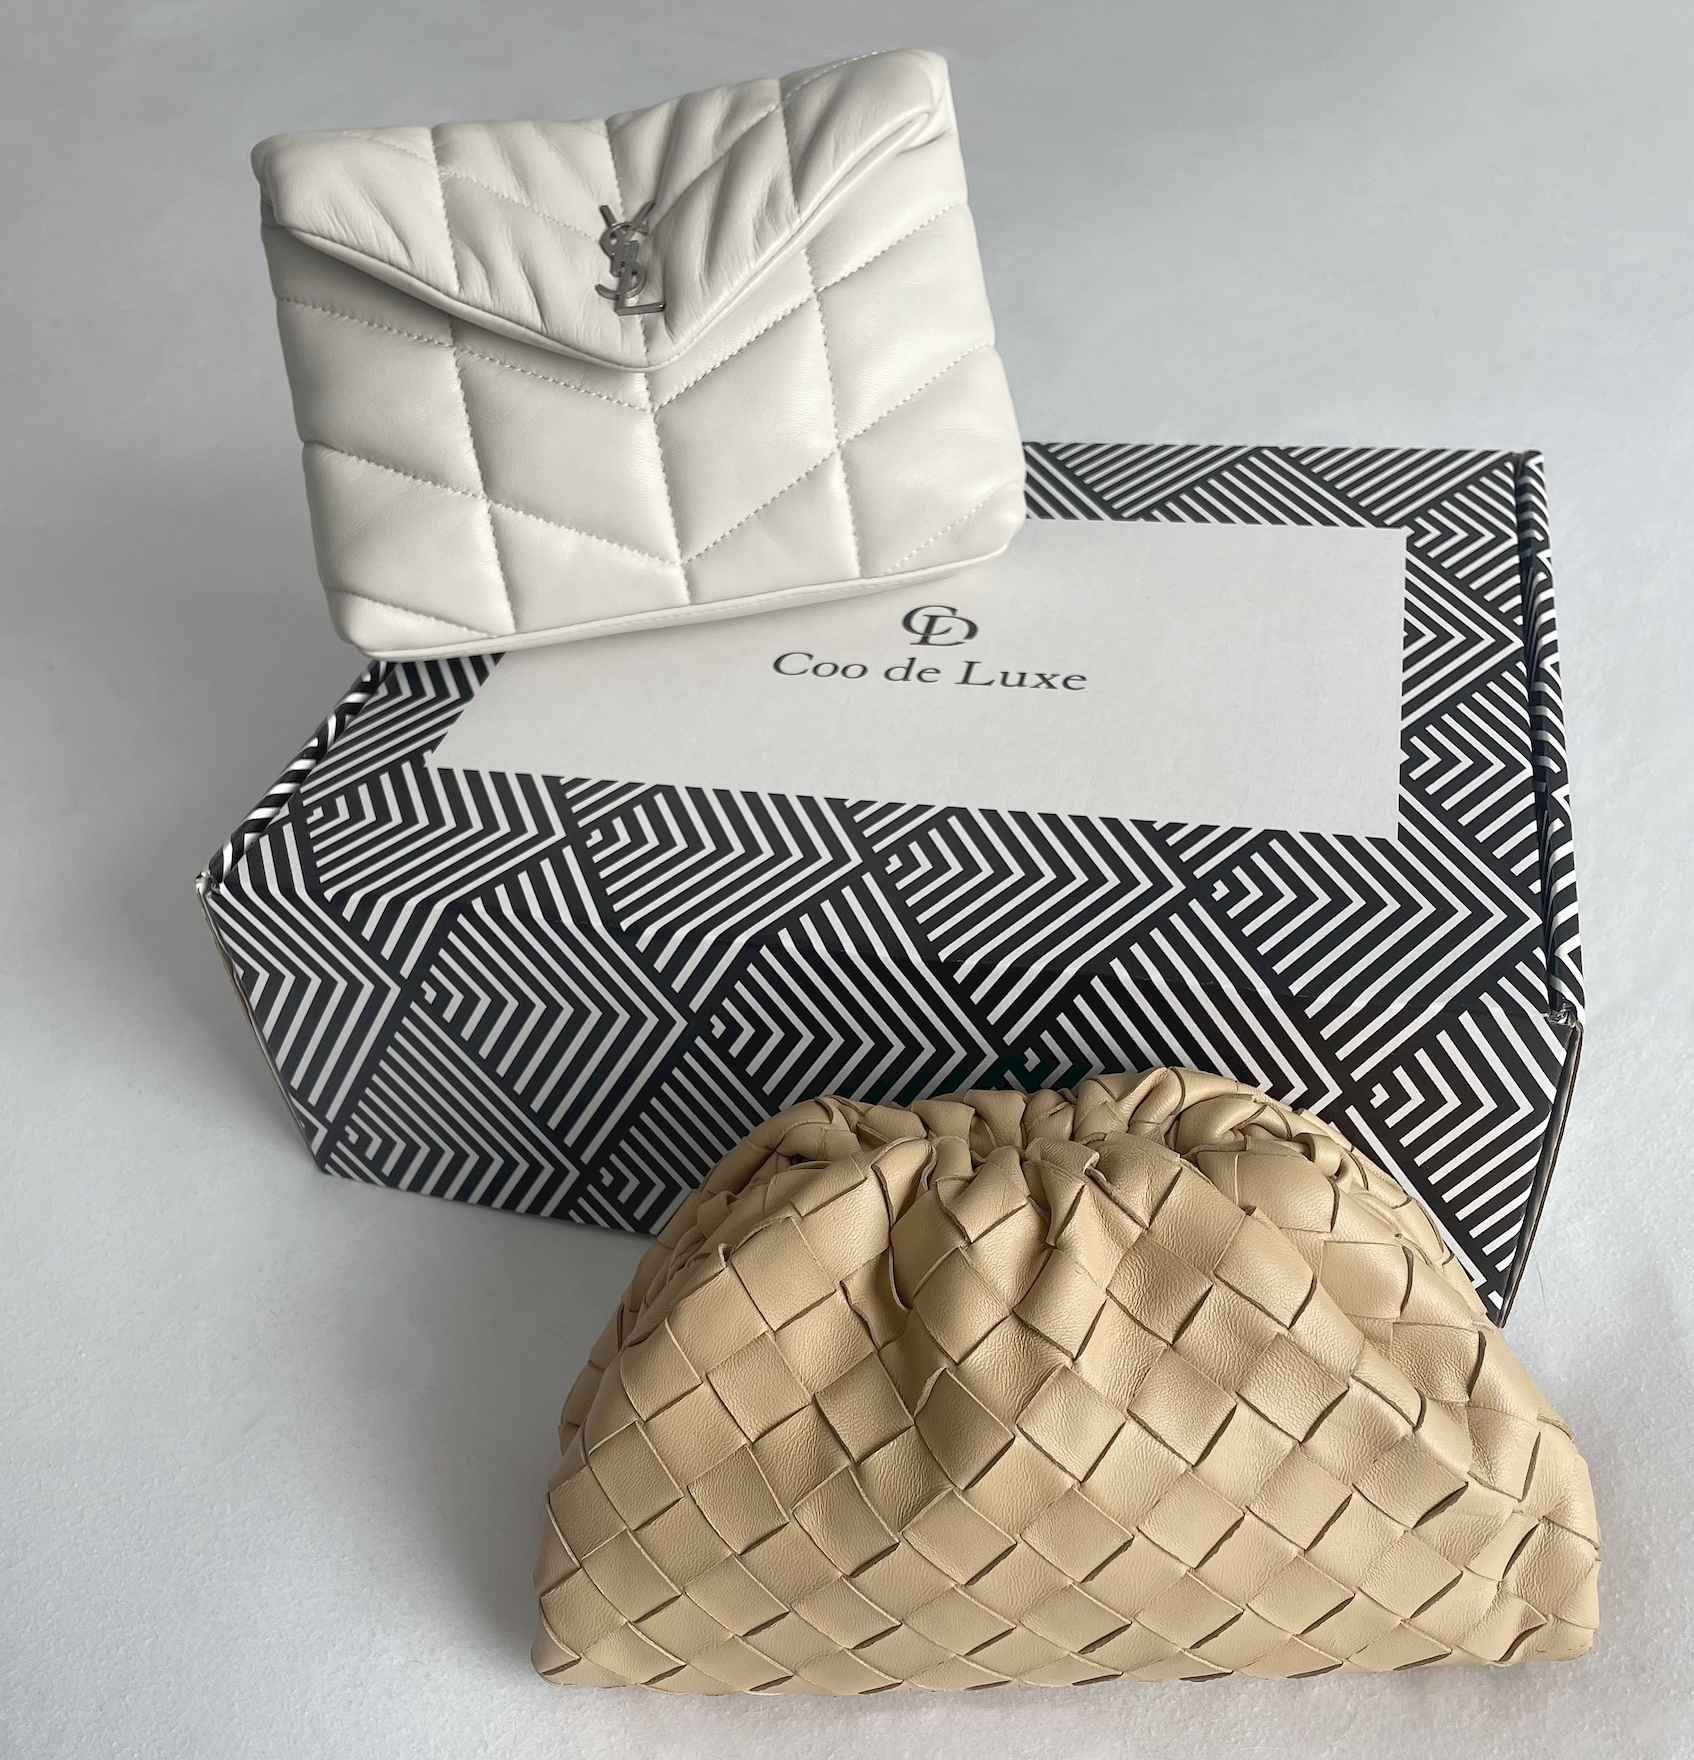 Coo de lux - handbag -designer - Saint Laurent -Bottega Veneta